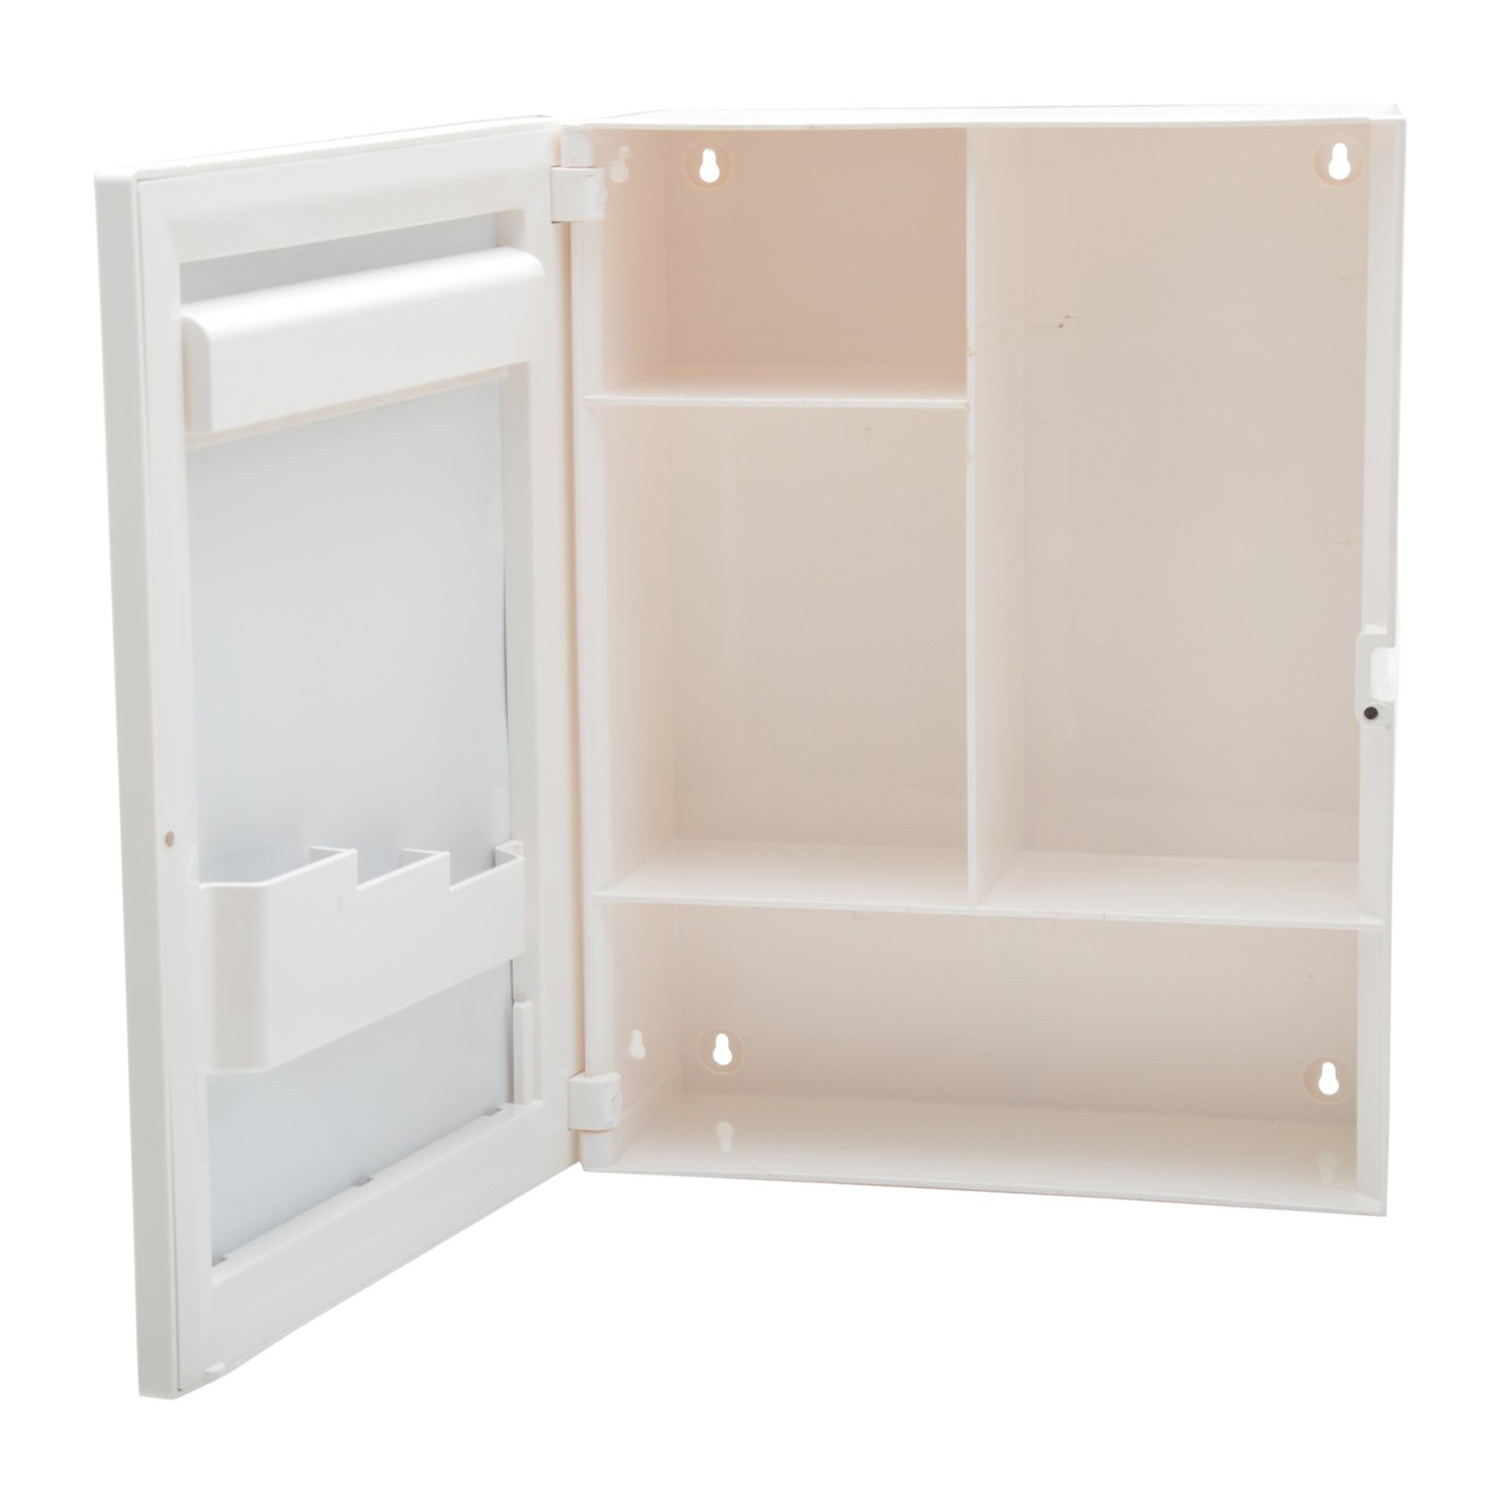 WATERTEC Polymer Bathroom Cabinet with Mirror (35 mc x 20 cm x 45 cm, White)